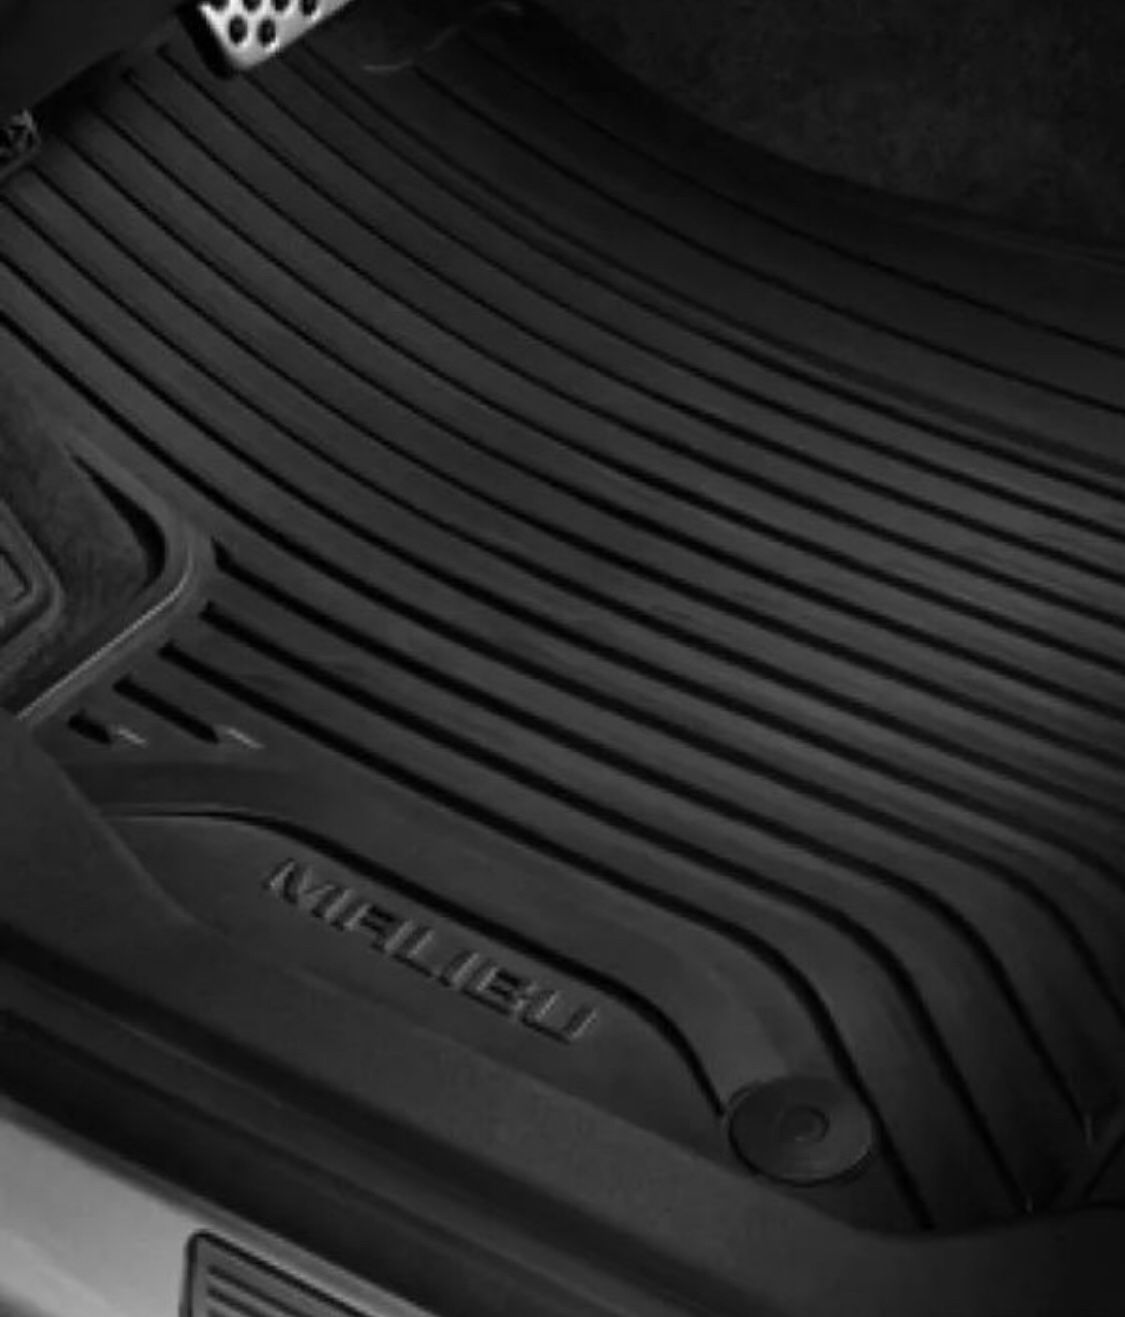 New 2016-2020 Chevrolet Malibu All weather floor mats